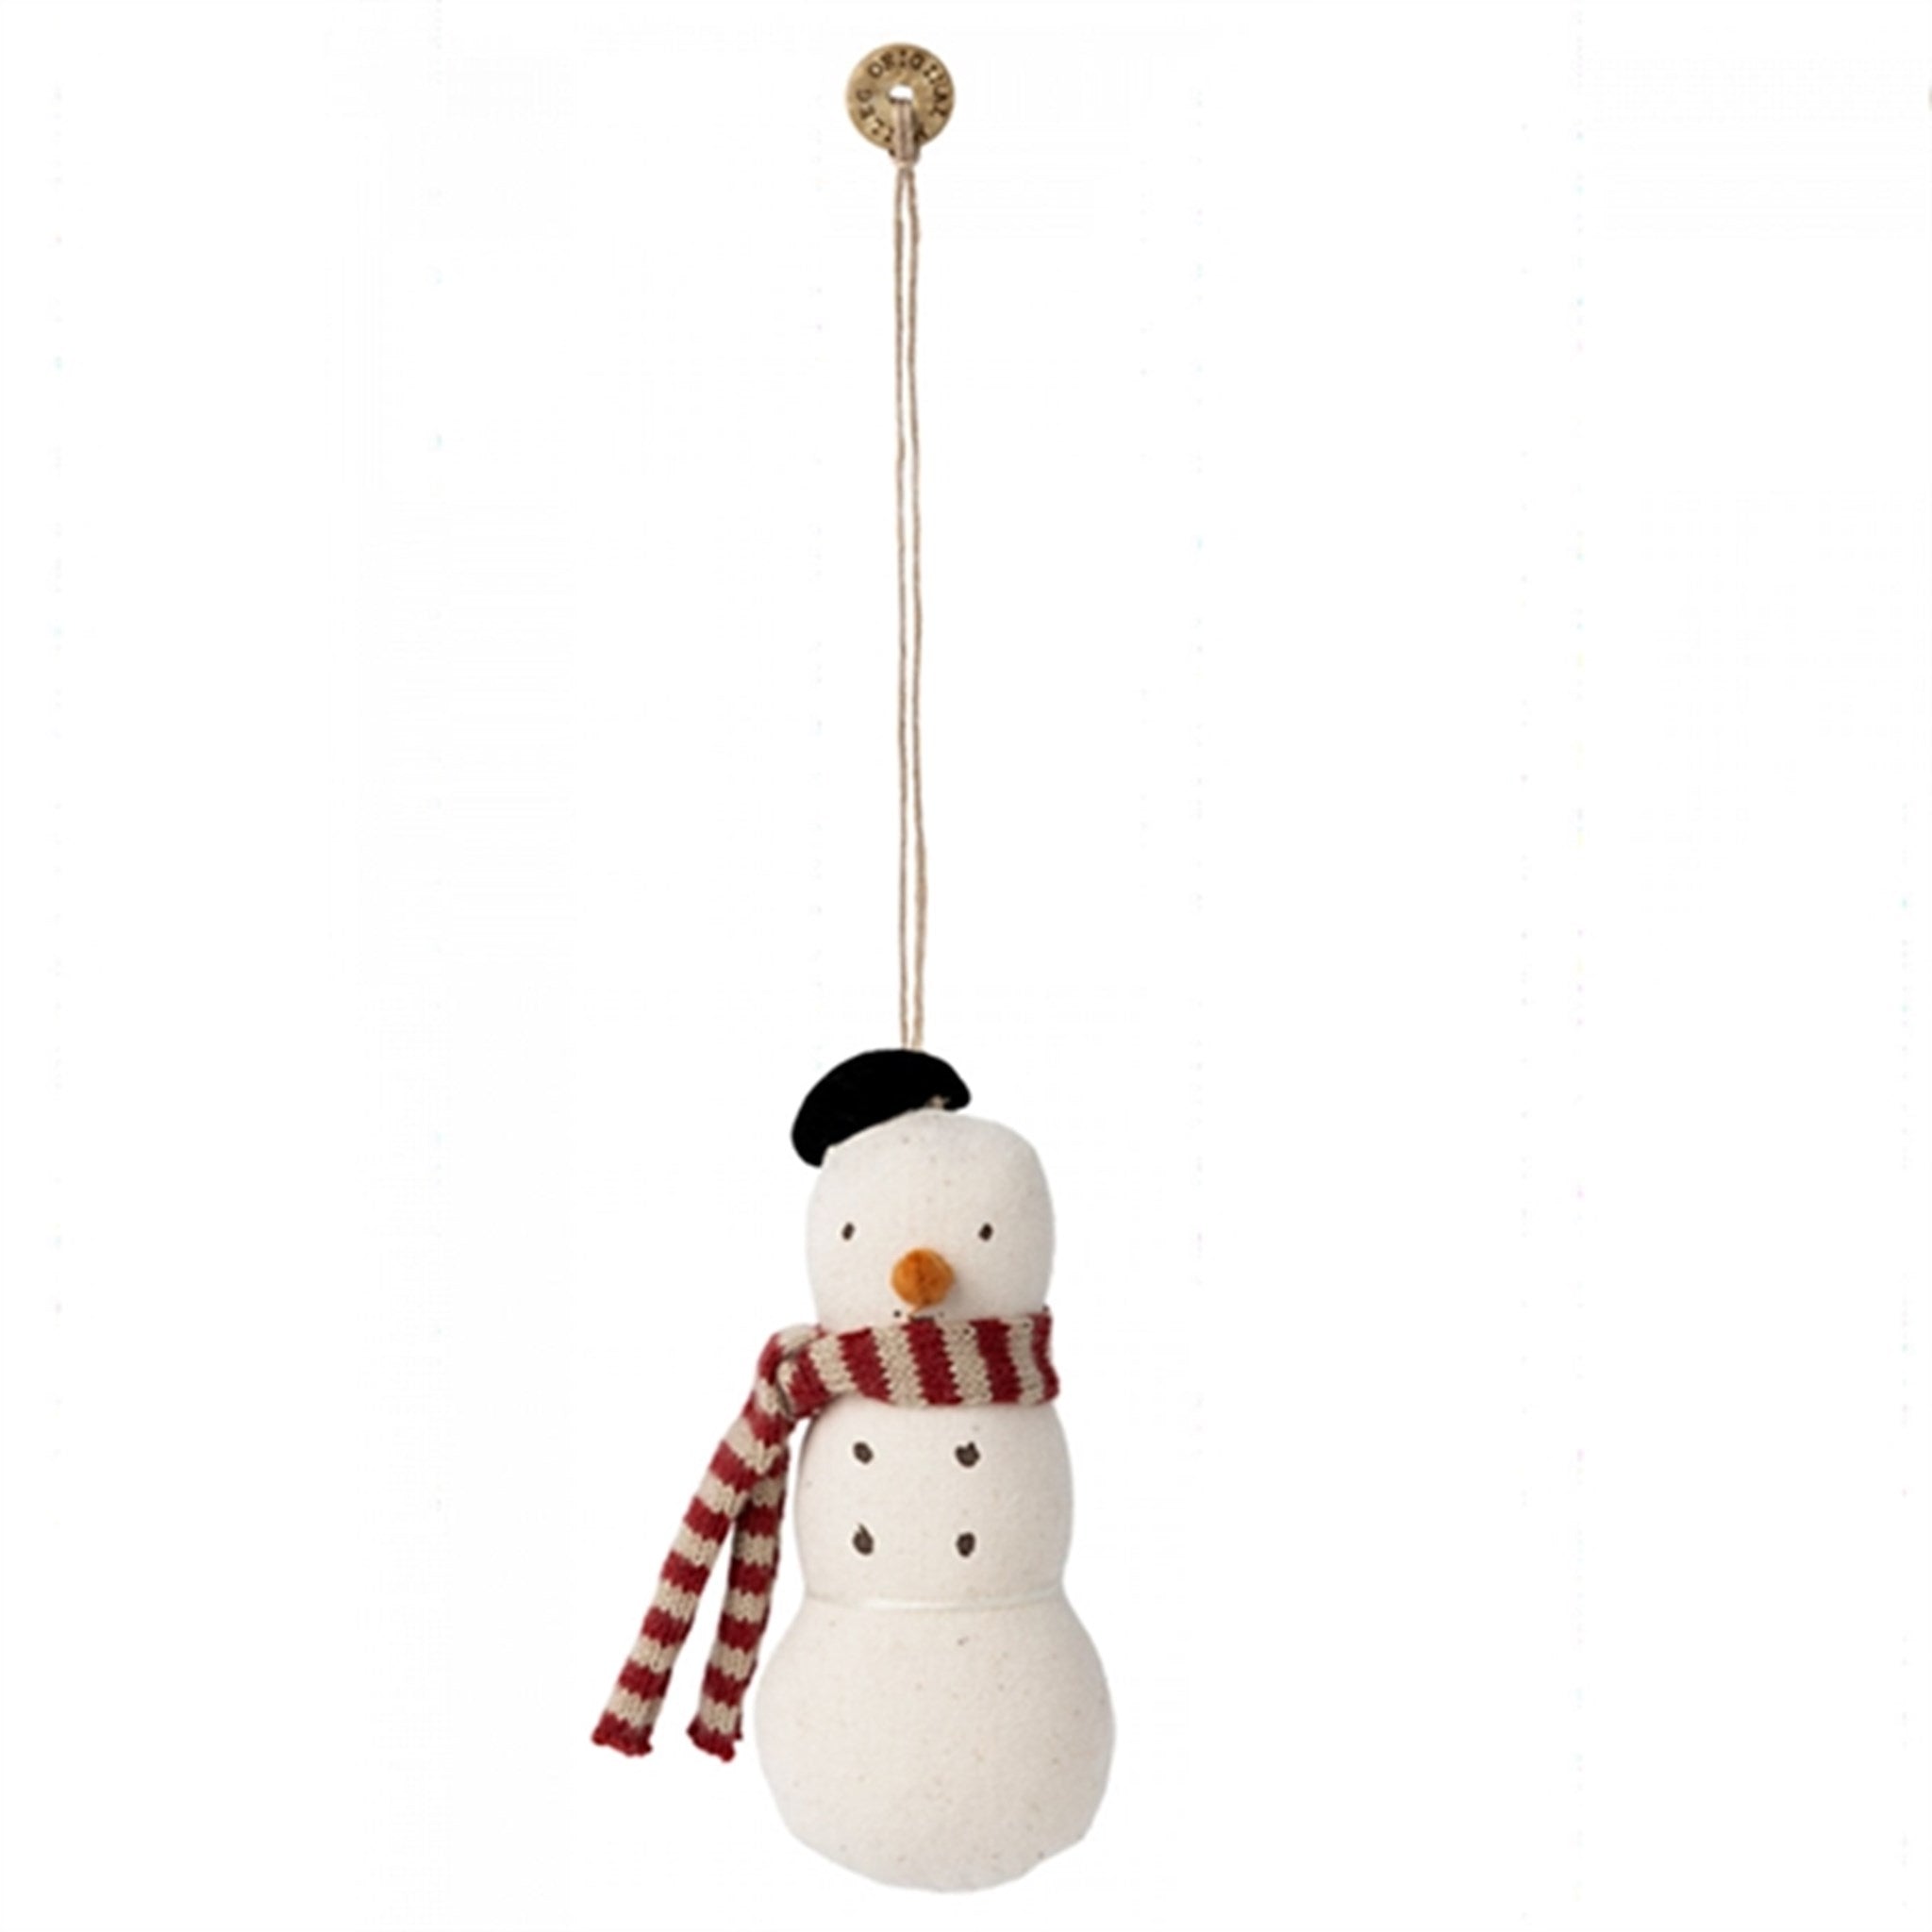 Maileg Snowman Ornament, Scarf